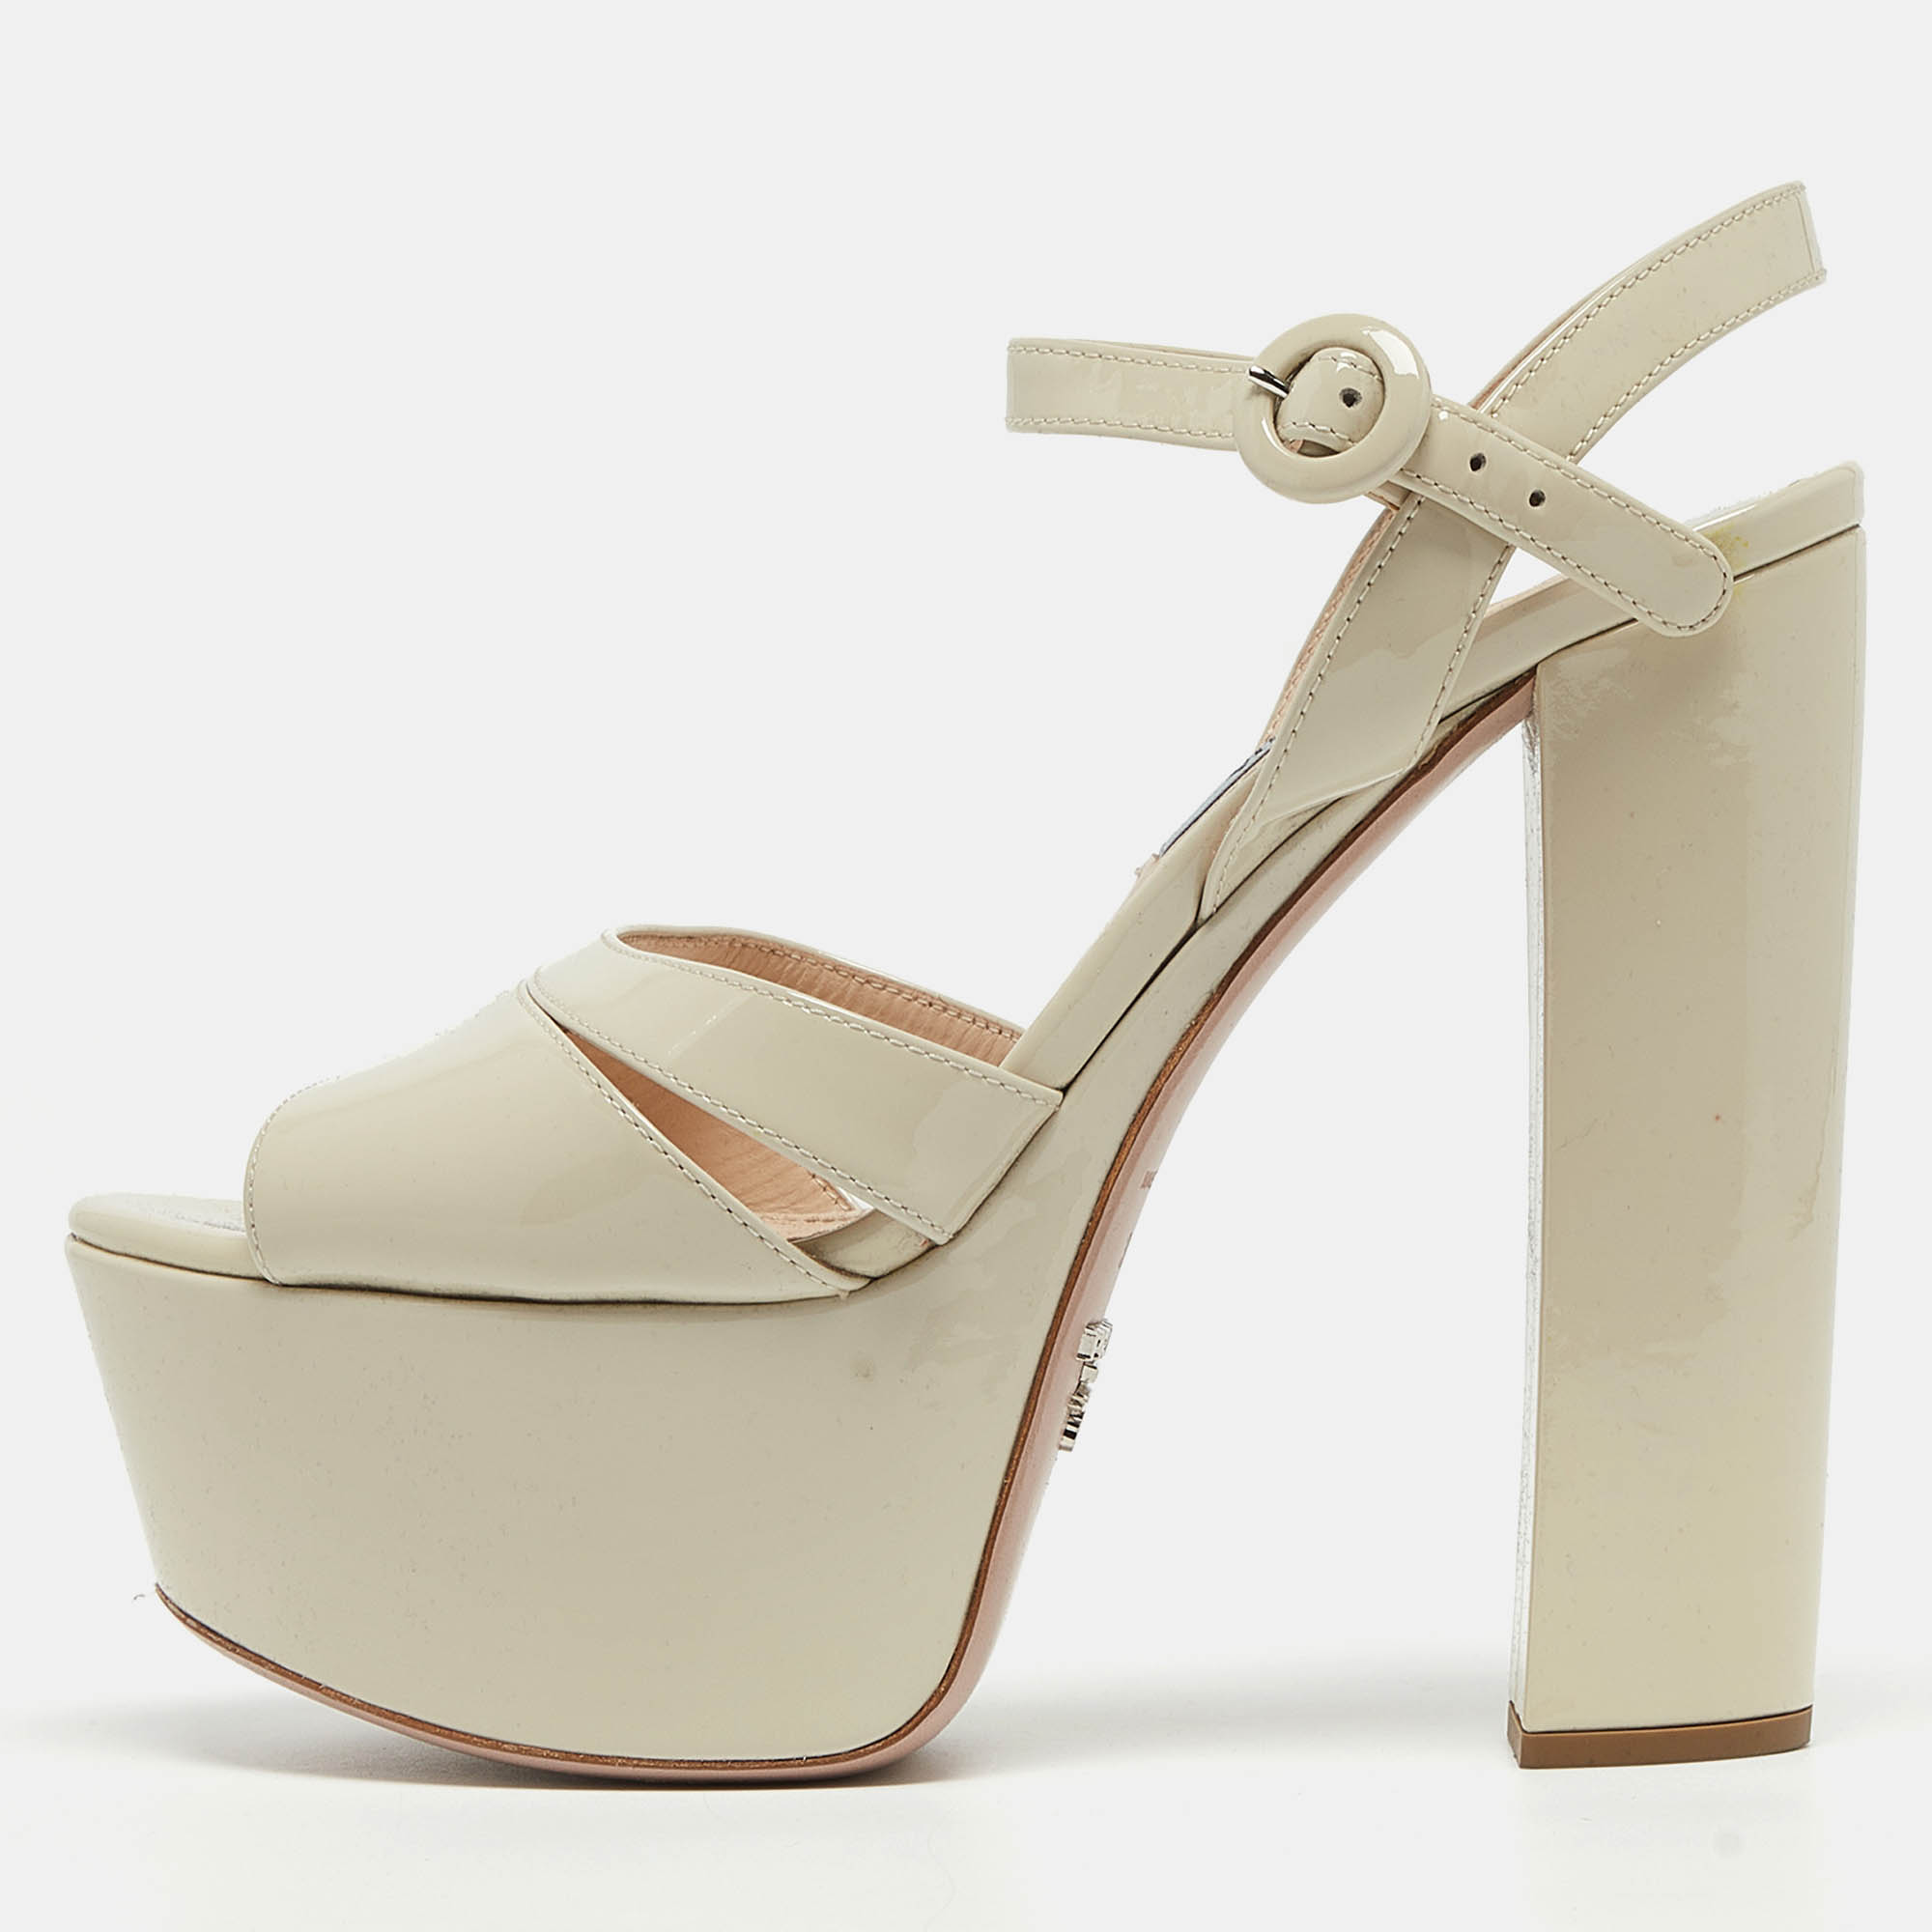 Prada cream patent leather platform block heel ankle strap sandals size 37.5